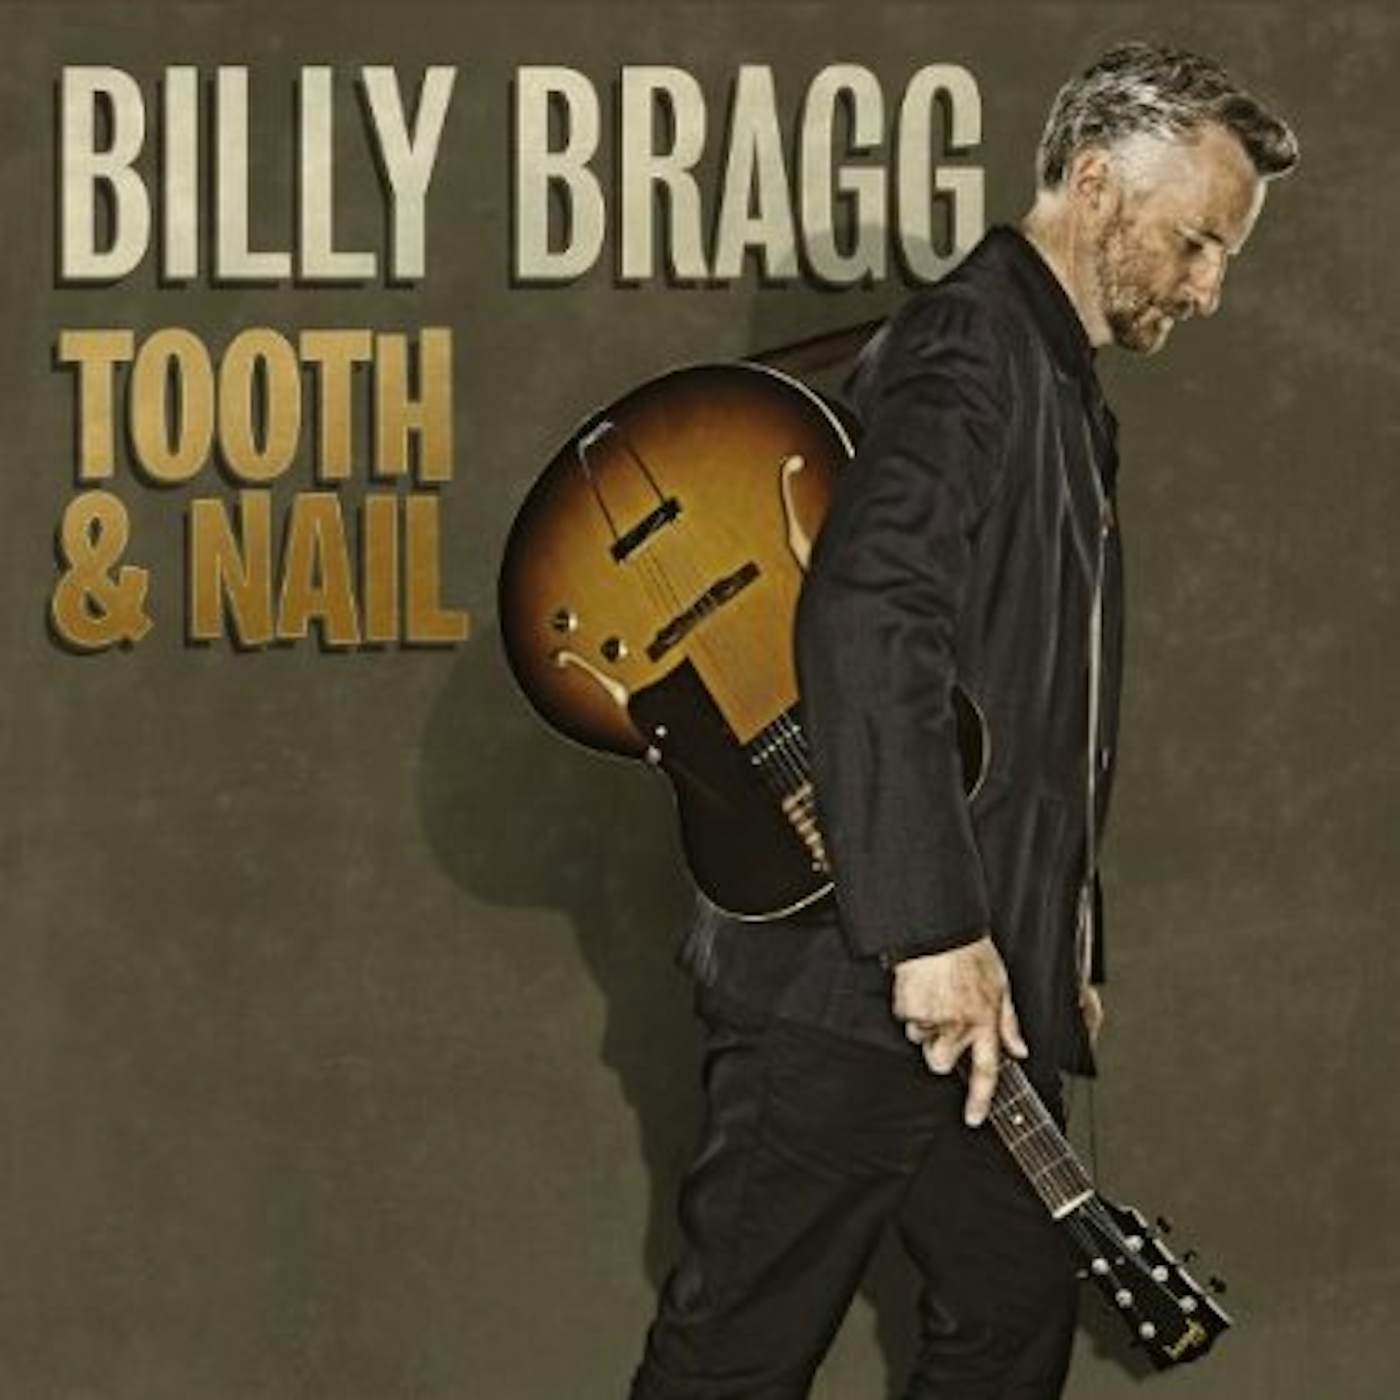 Billy Bragg Tooth & Nail Vinyl Record